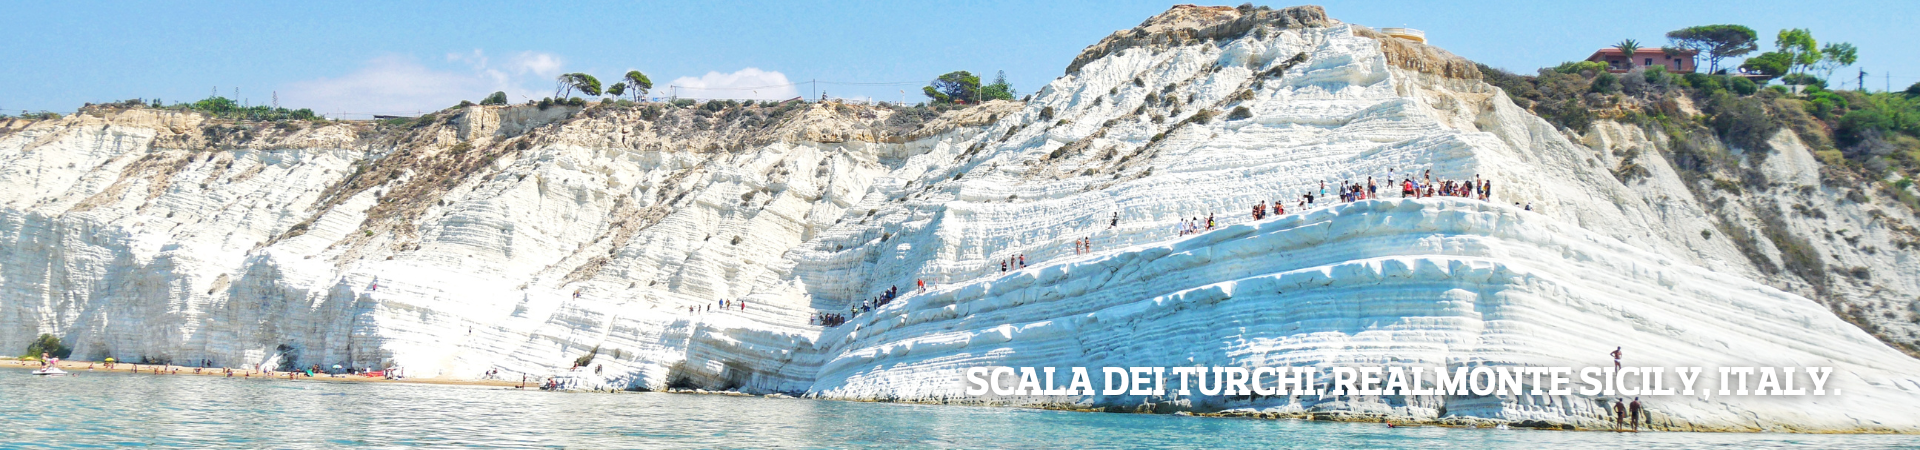 Dreamy lunar white cliffs of Scala Dei Turchi, Sicily, Italy